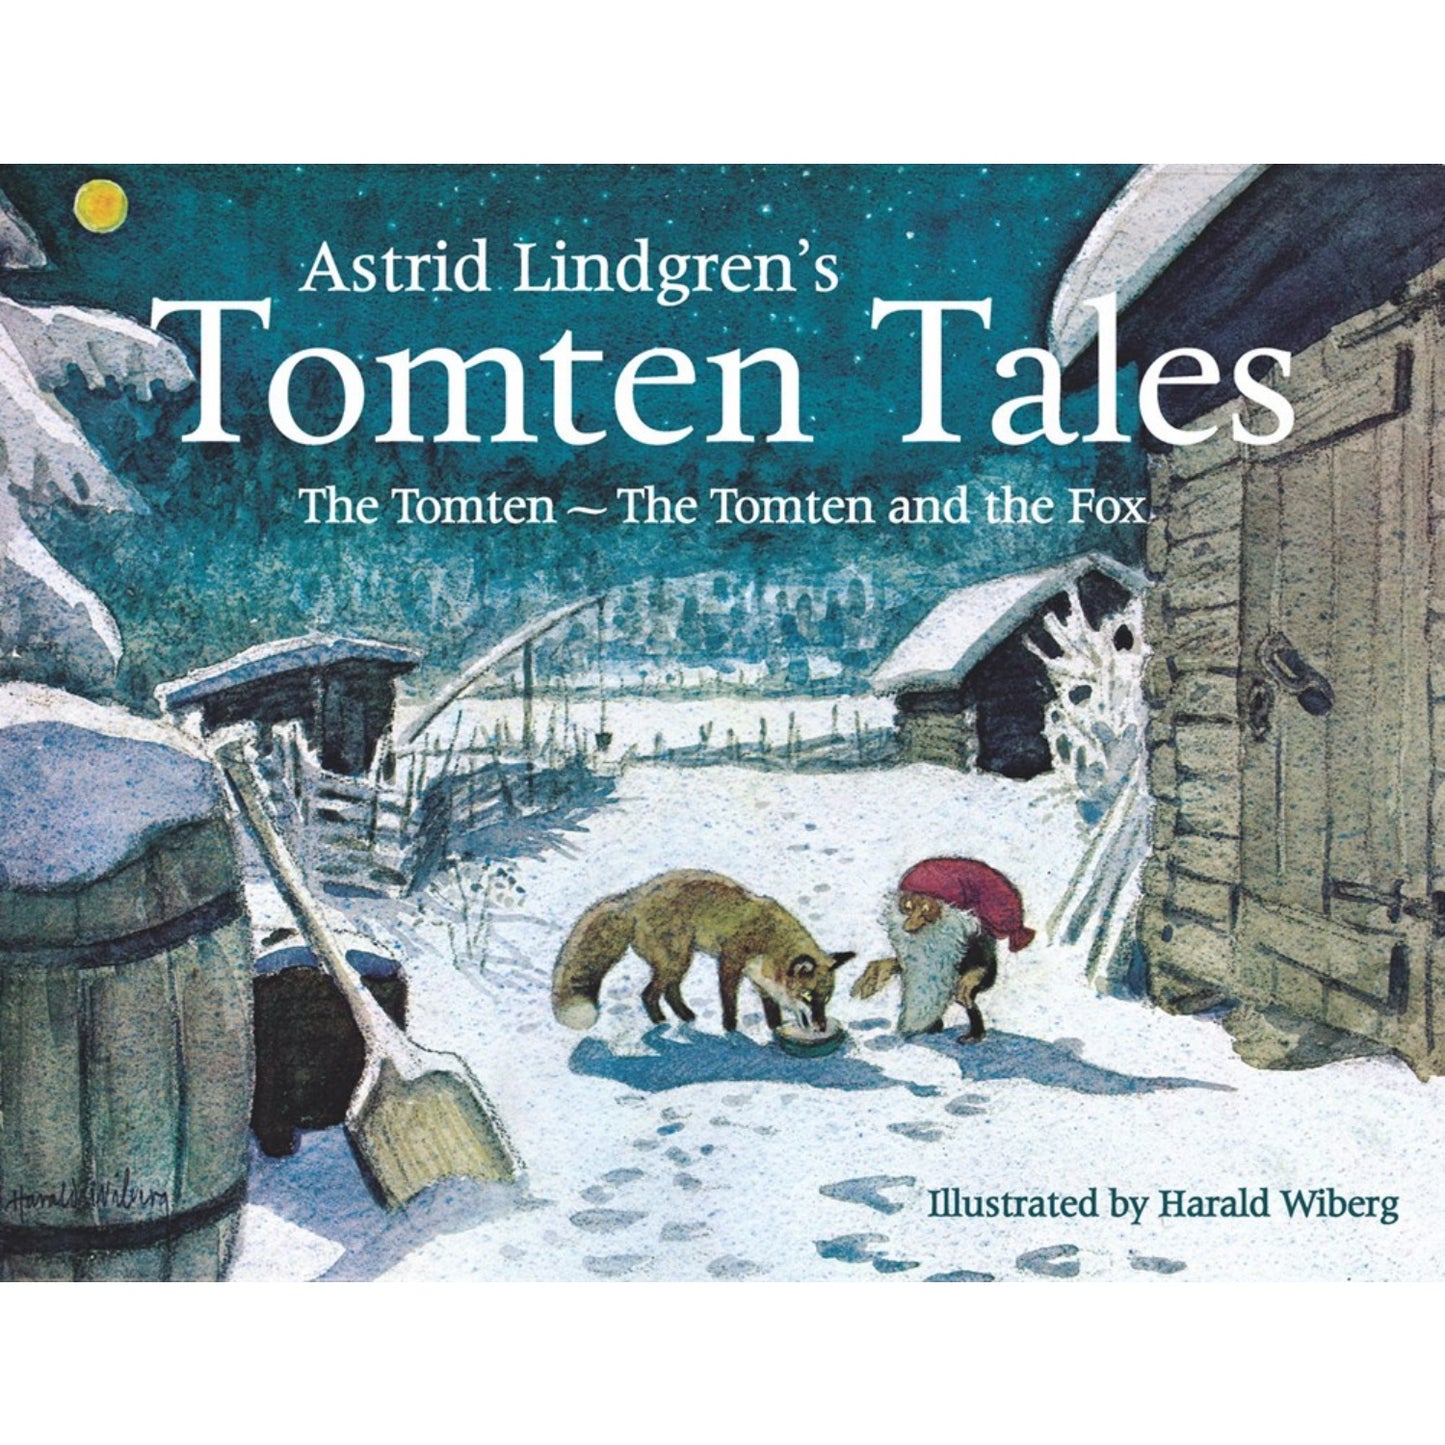 The Tomten + The Tomten and the Fox - Astrid Lindgren's Tomten Tales | Hardcover | Tales & Myths for Children